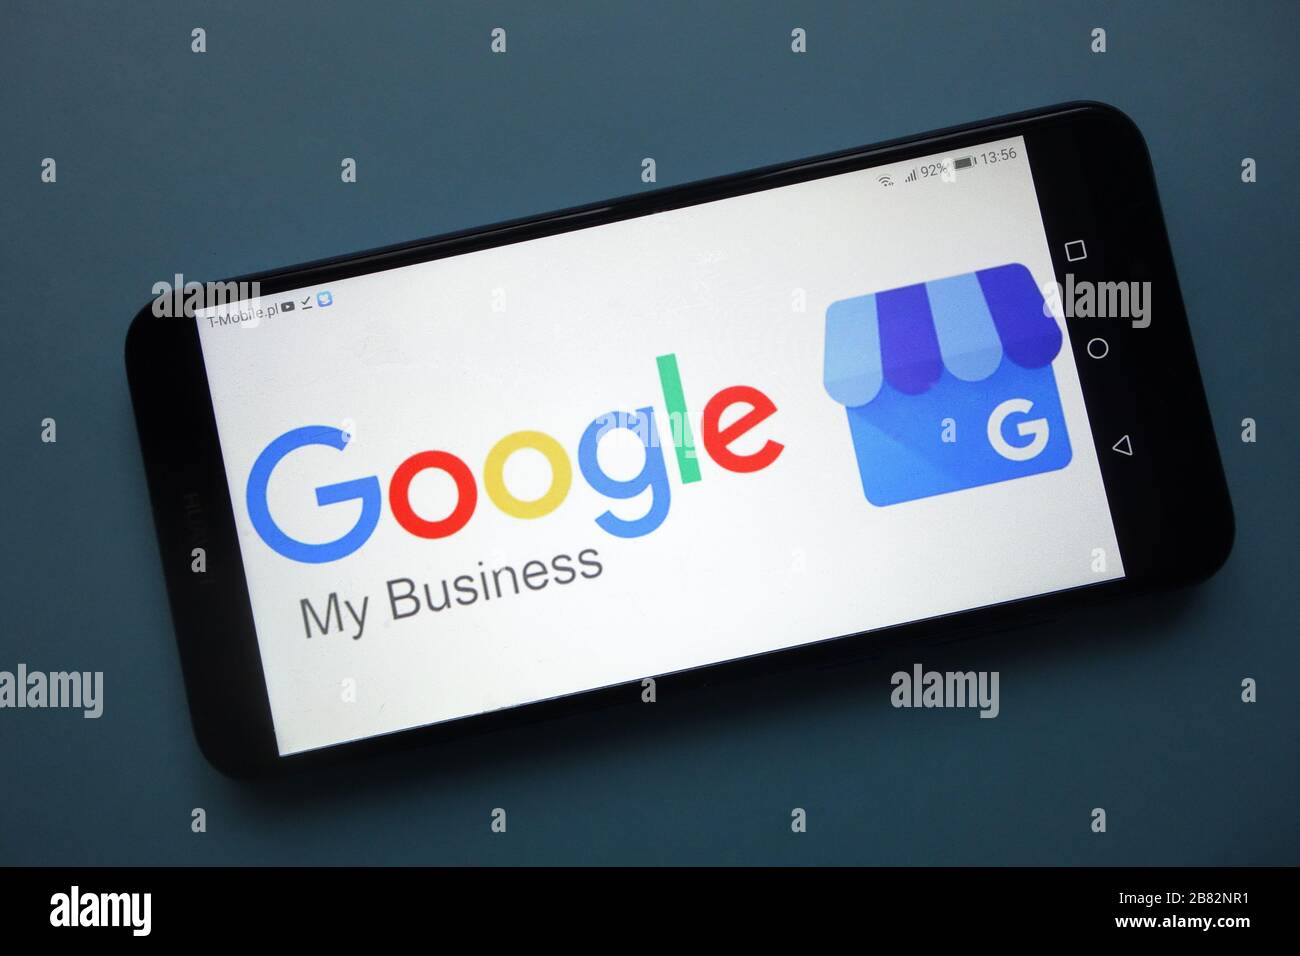 Google My Business logo displayed on smartphone Stock Photo